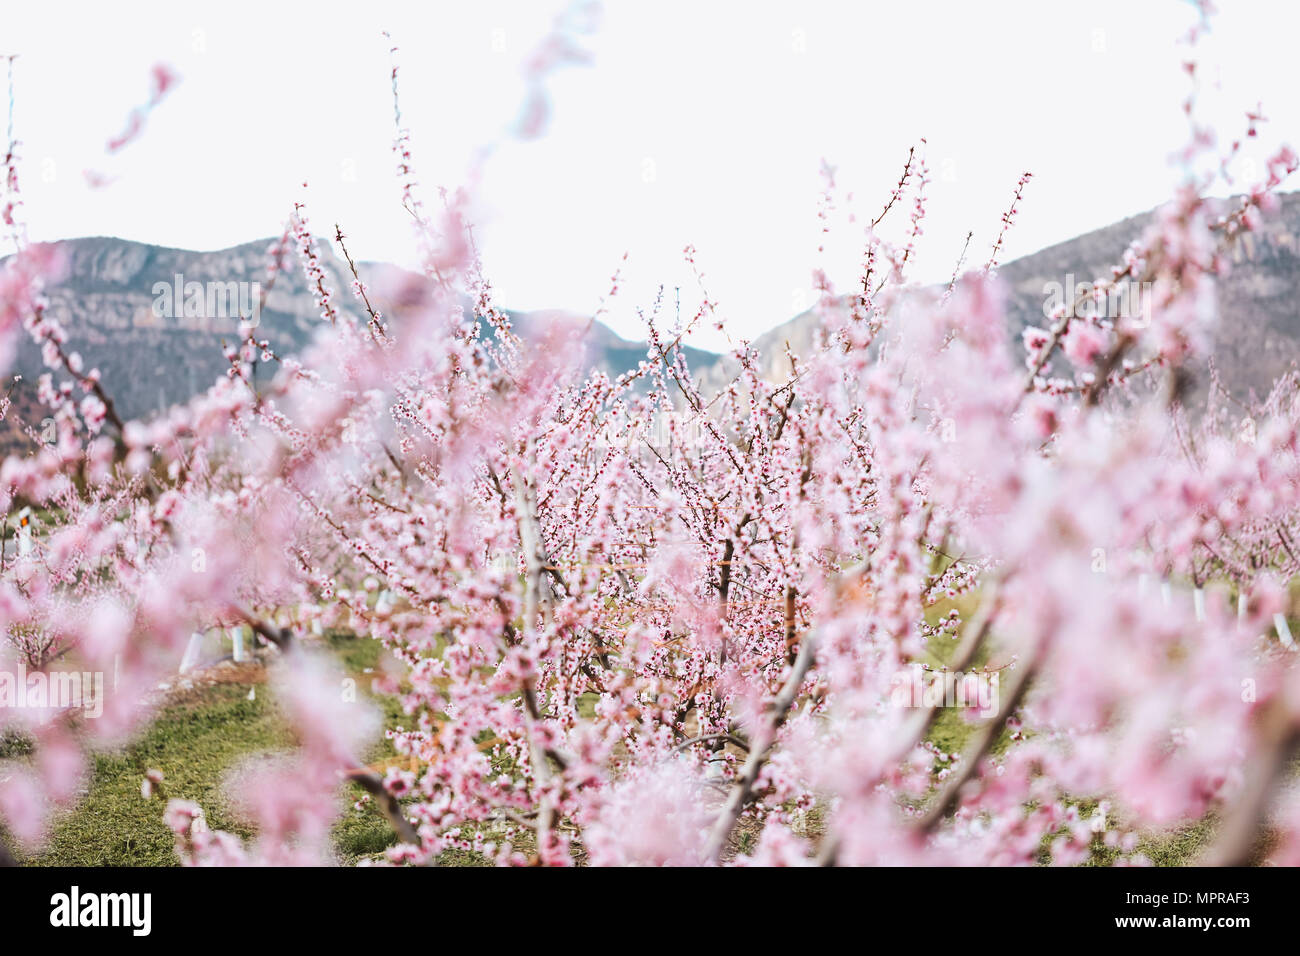 Spain, Lleida, Cherry blossoms Stock Photo